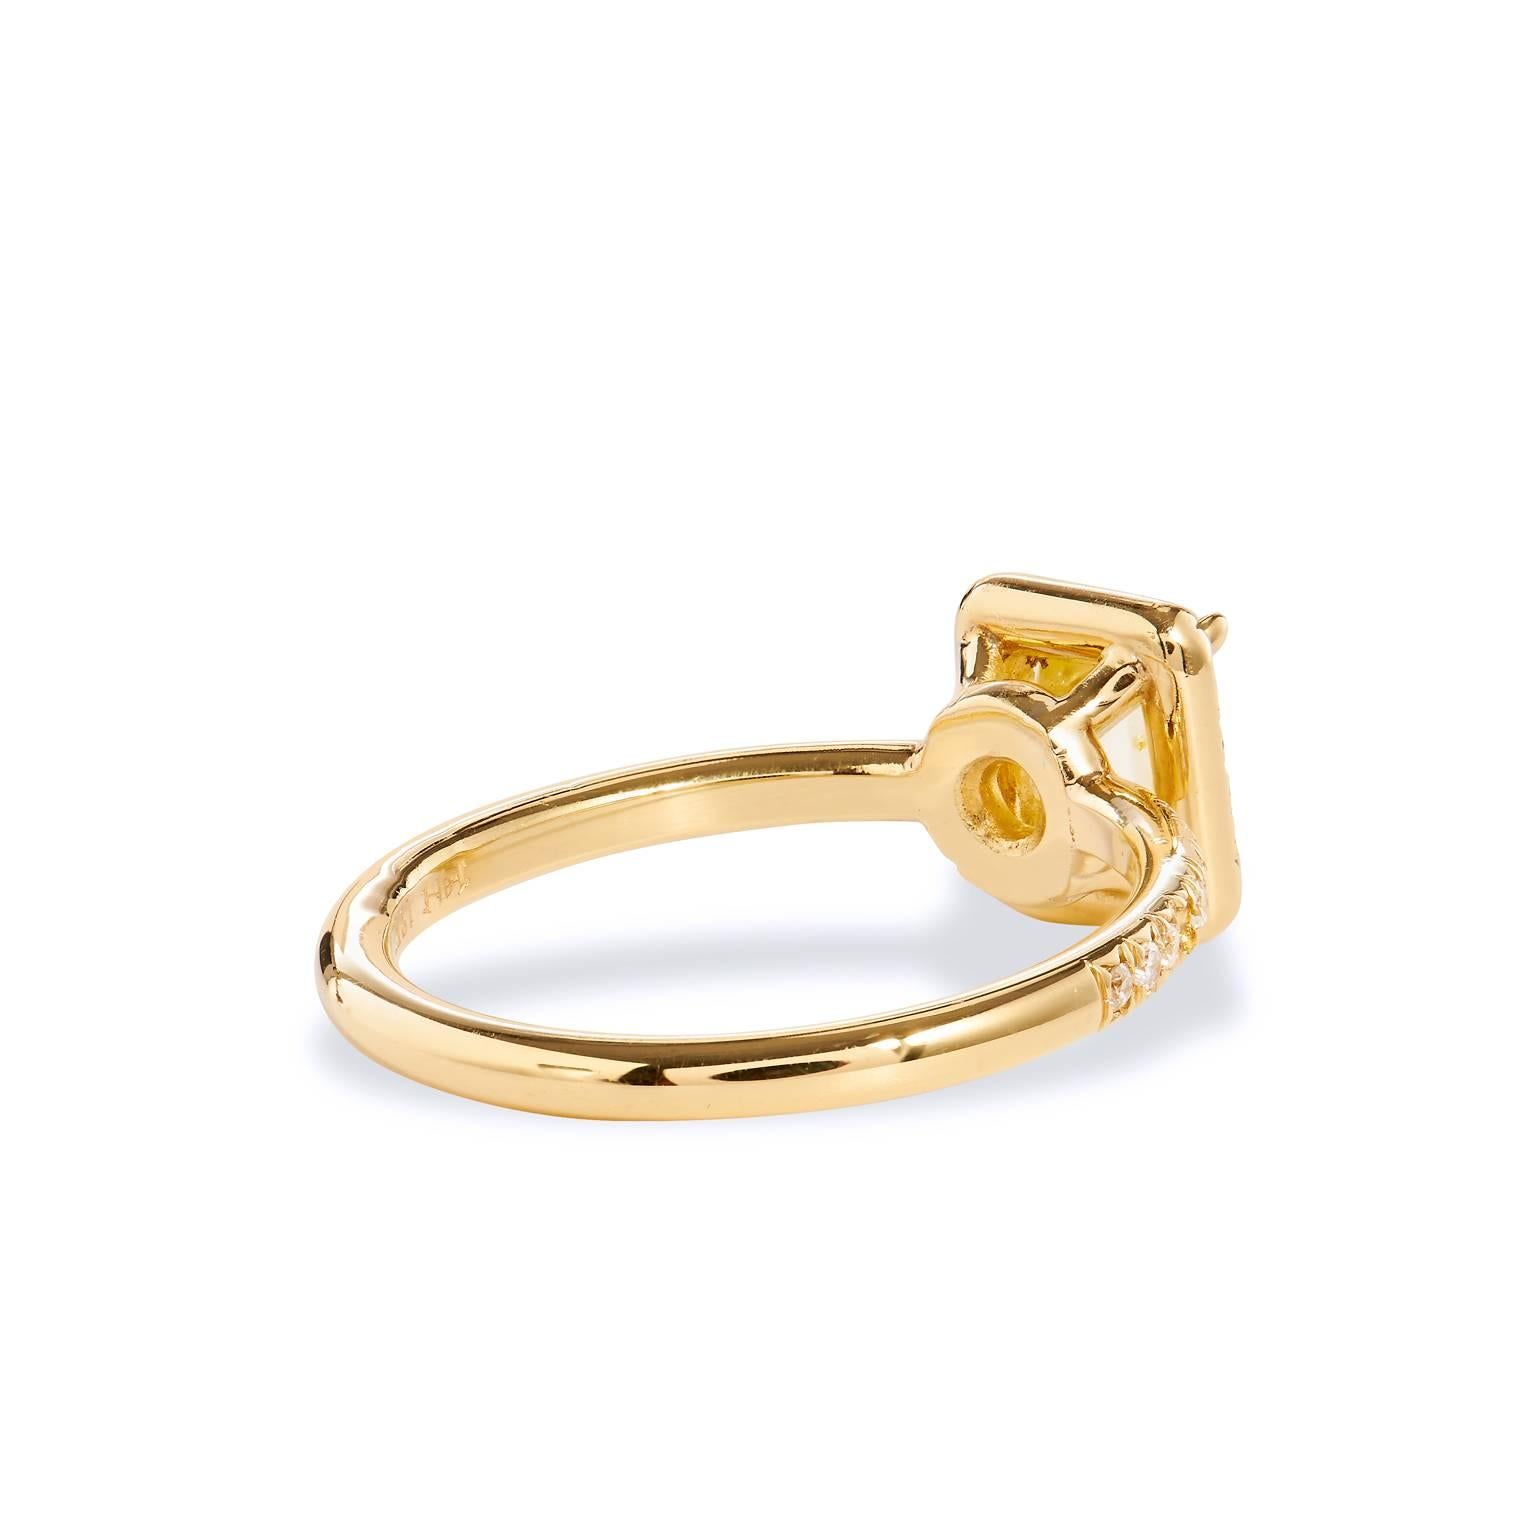 Women's H & H 1.20 Carat Fancy Yellow Diamond Ring